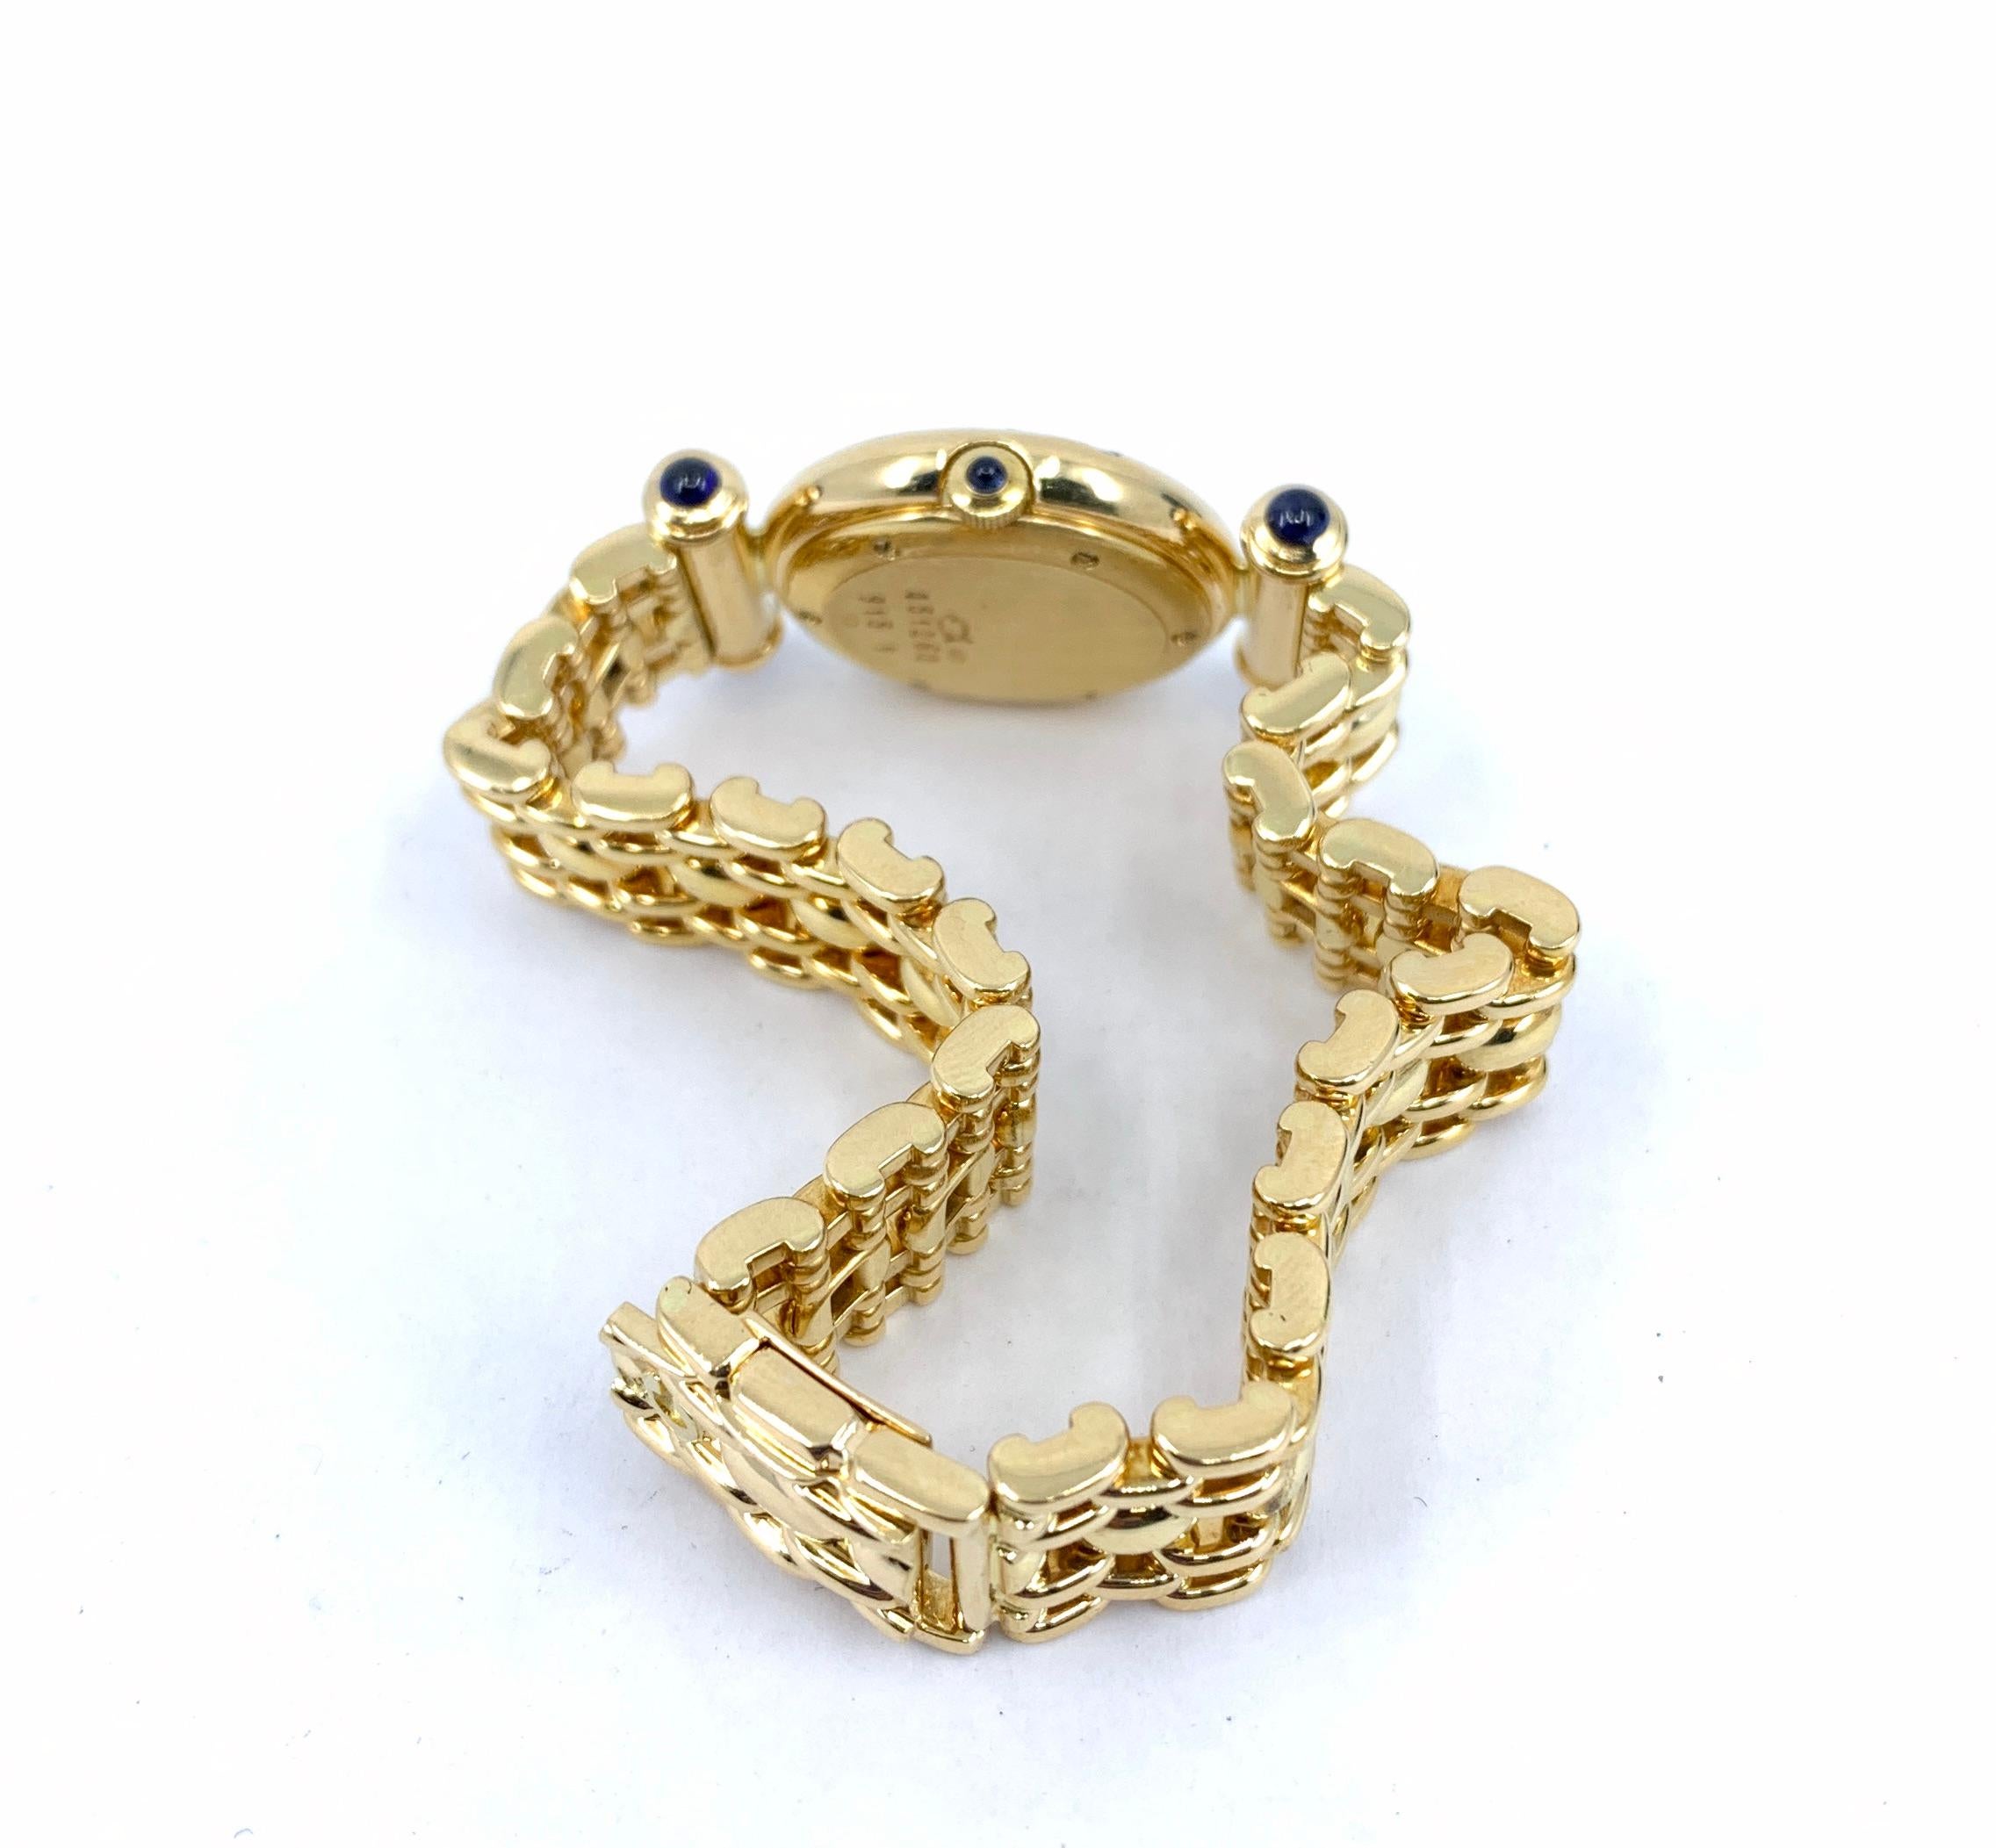 Women's Chopard Femme Classique Quartz Diamond Watch in 18 Karat Yellow Gold, Circa 1990 For Sale